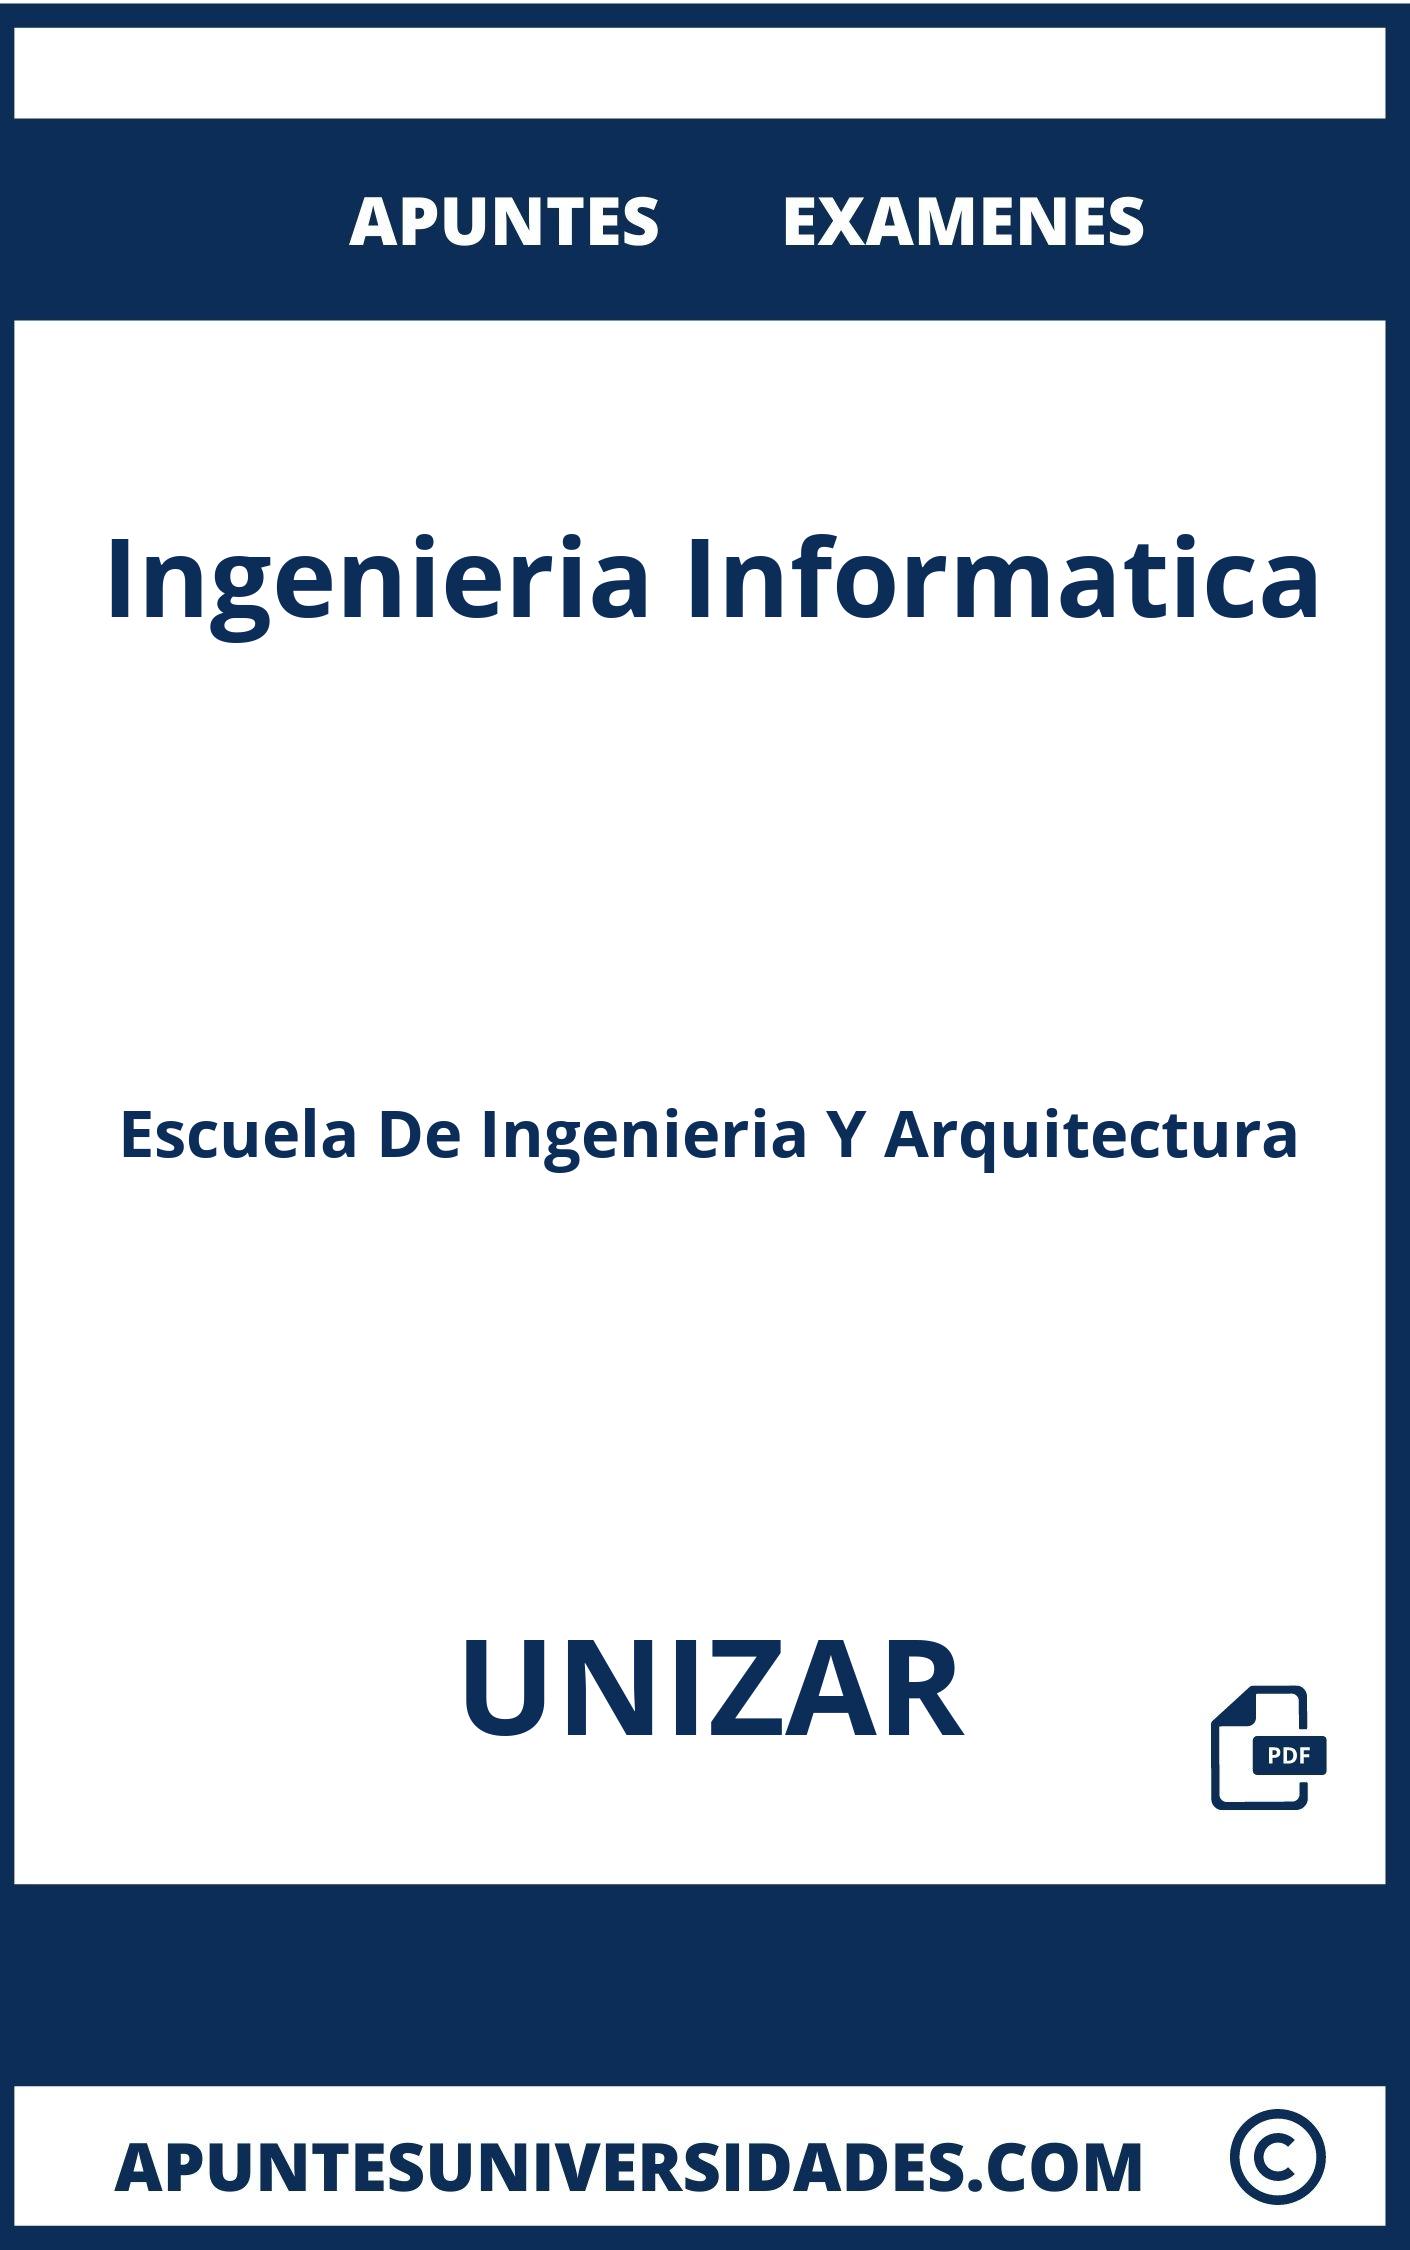 Examenes Apuntes Ingenieria Informatica UNIZAR